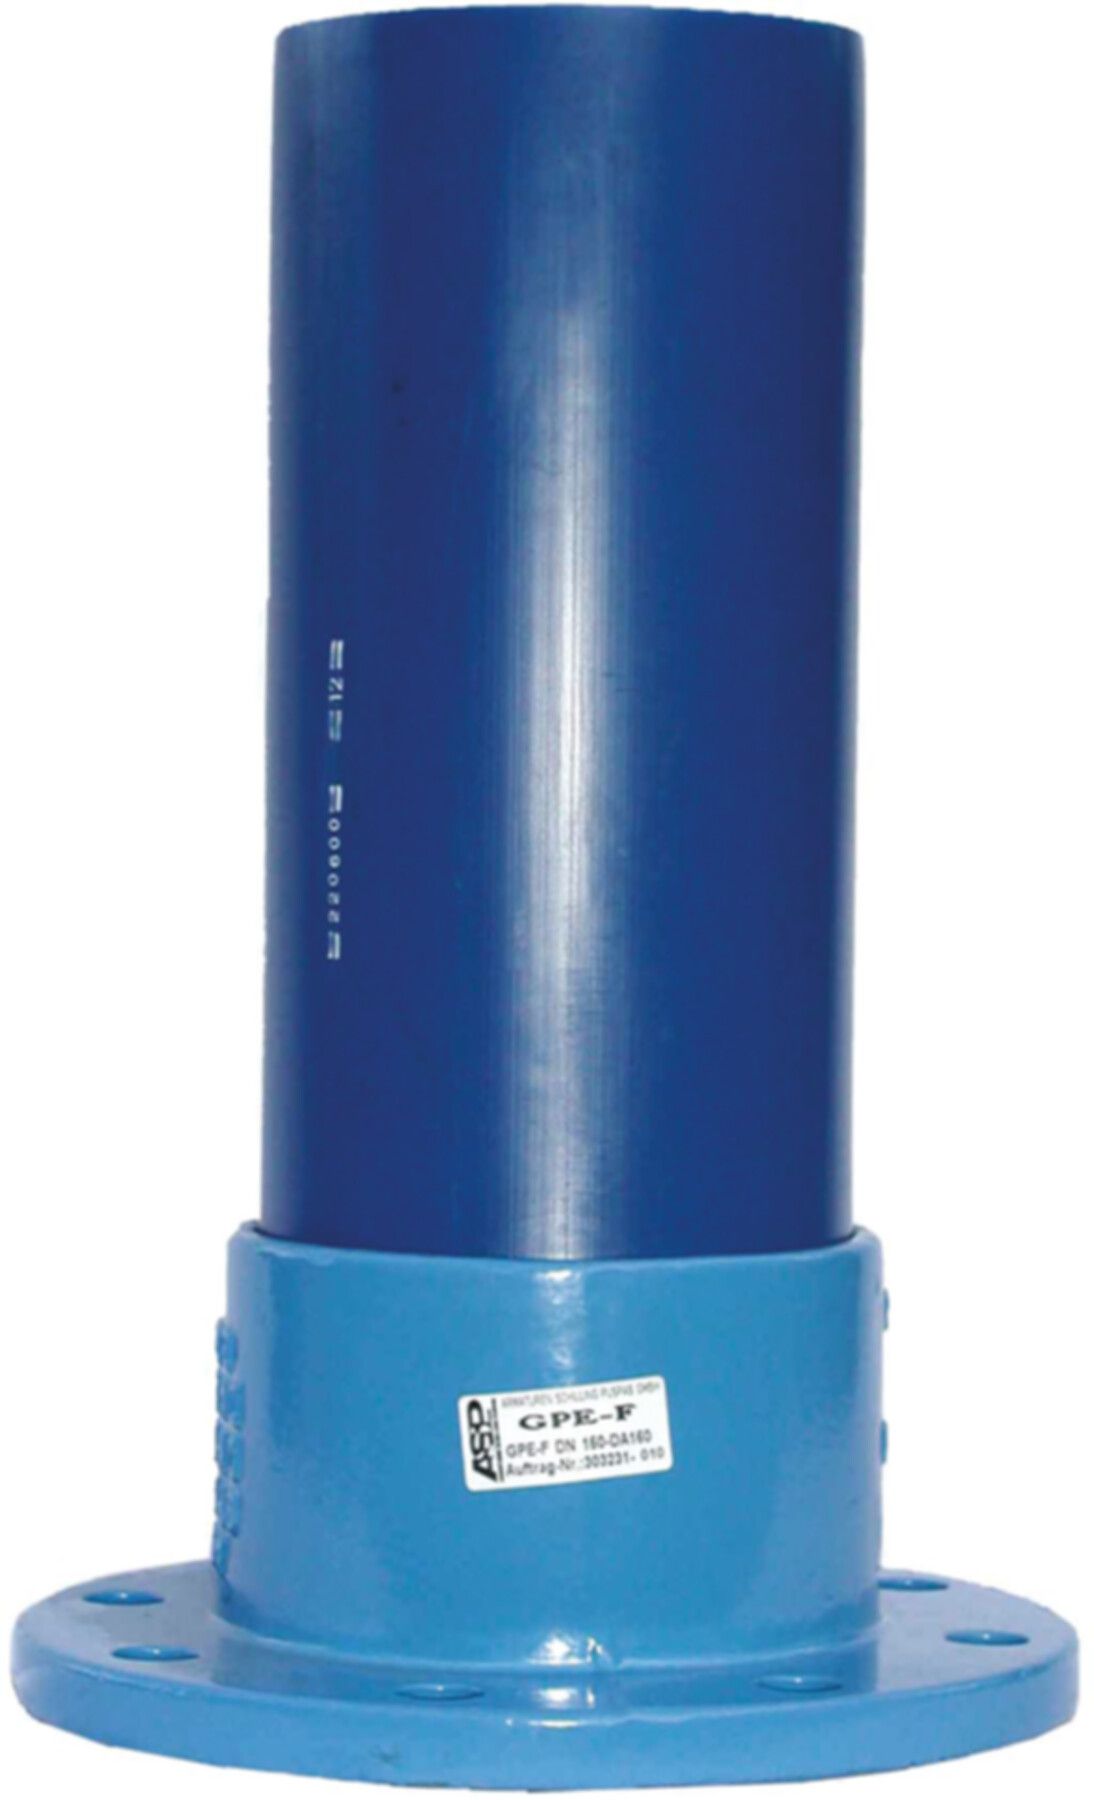 Übergangsstück Flansch-PE GPE PE100 S5 für Wasser PN 10/16 DN 150 / d 160mm - Frischhut Steckmuffenformstücke